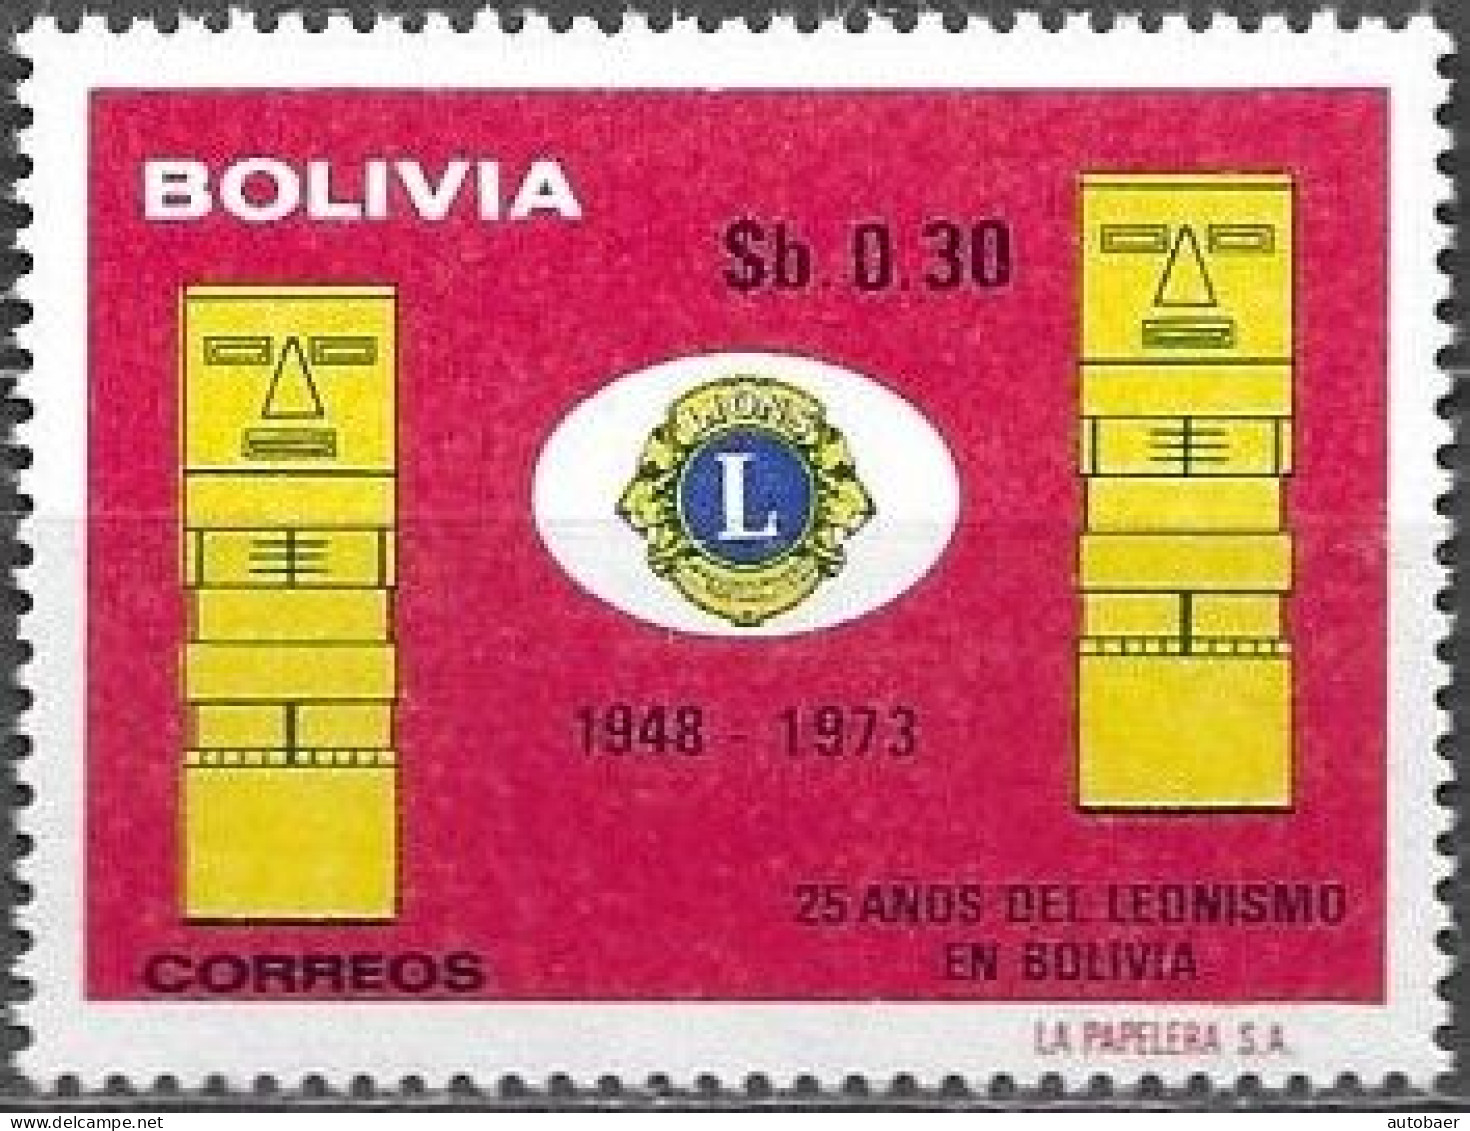 Bolivia Bolivie Bolivien 1975 25 Years Lions Club Leonismo Michel No. 872 MNH Mint Postfrisch Neuf ** - Bolivien